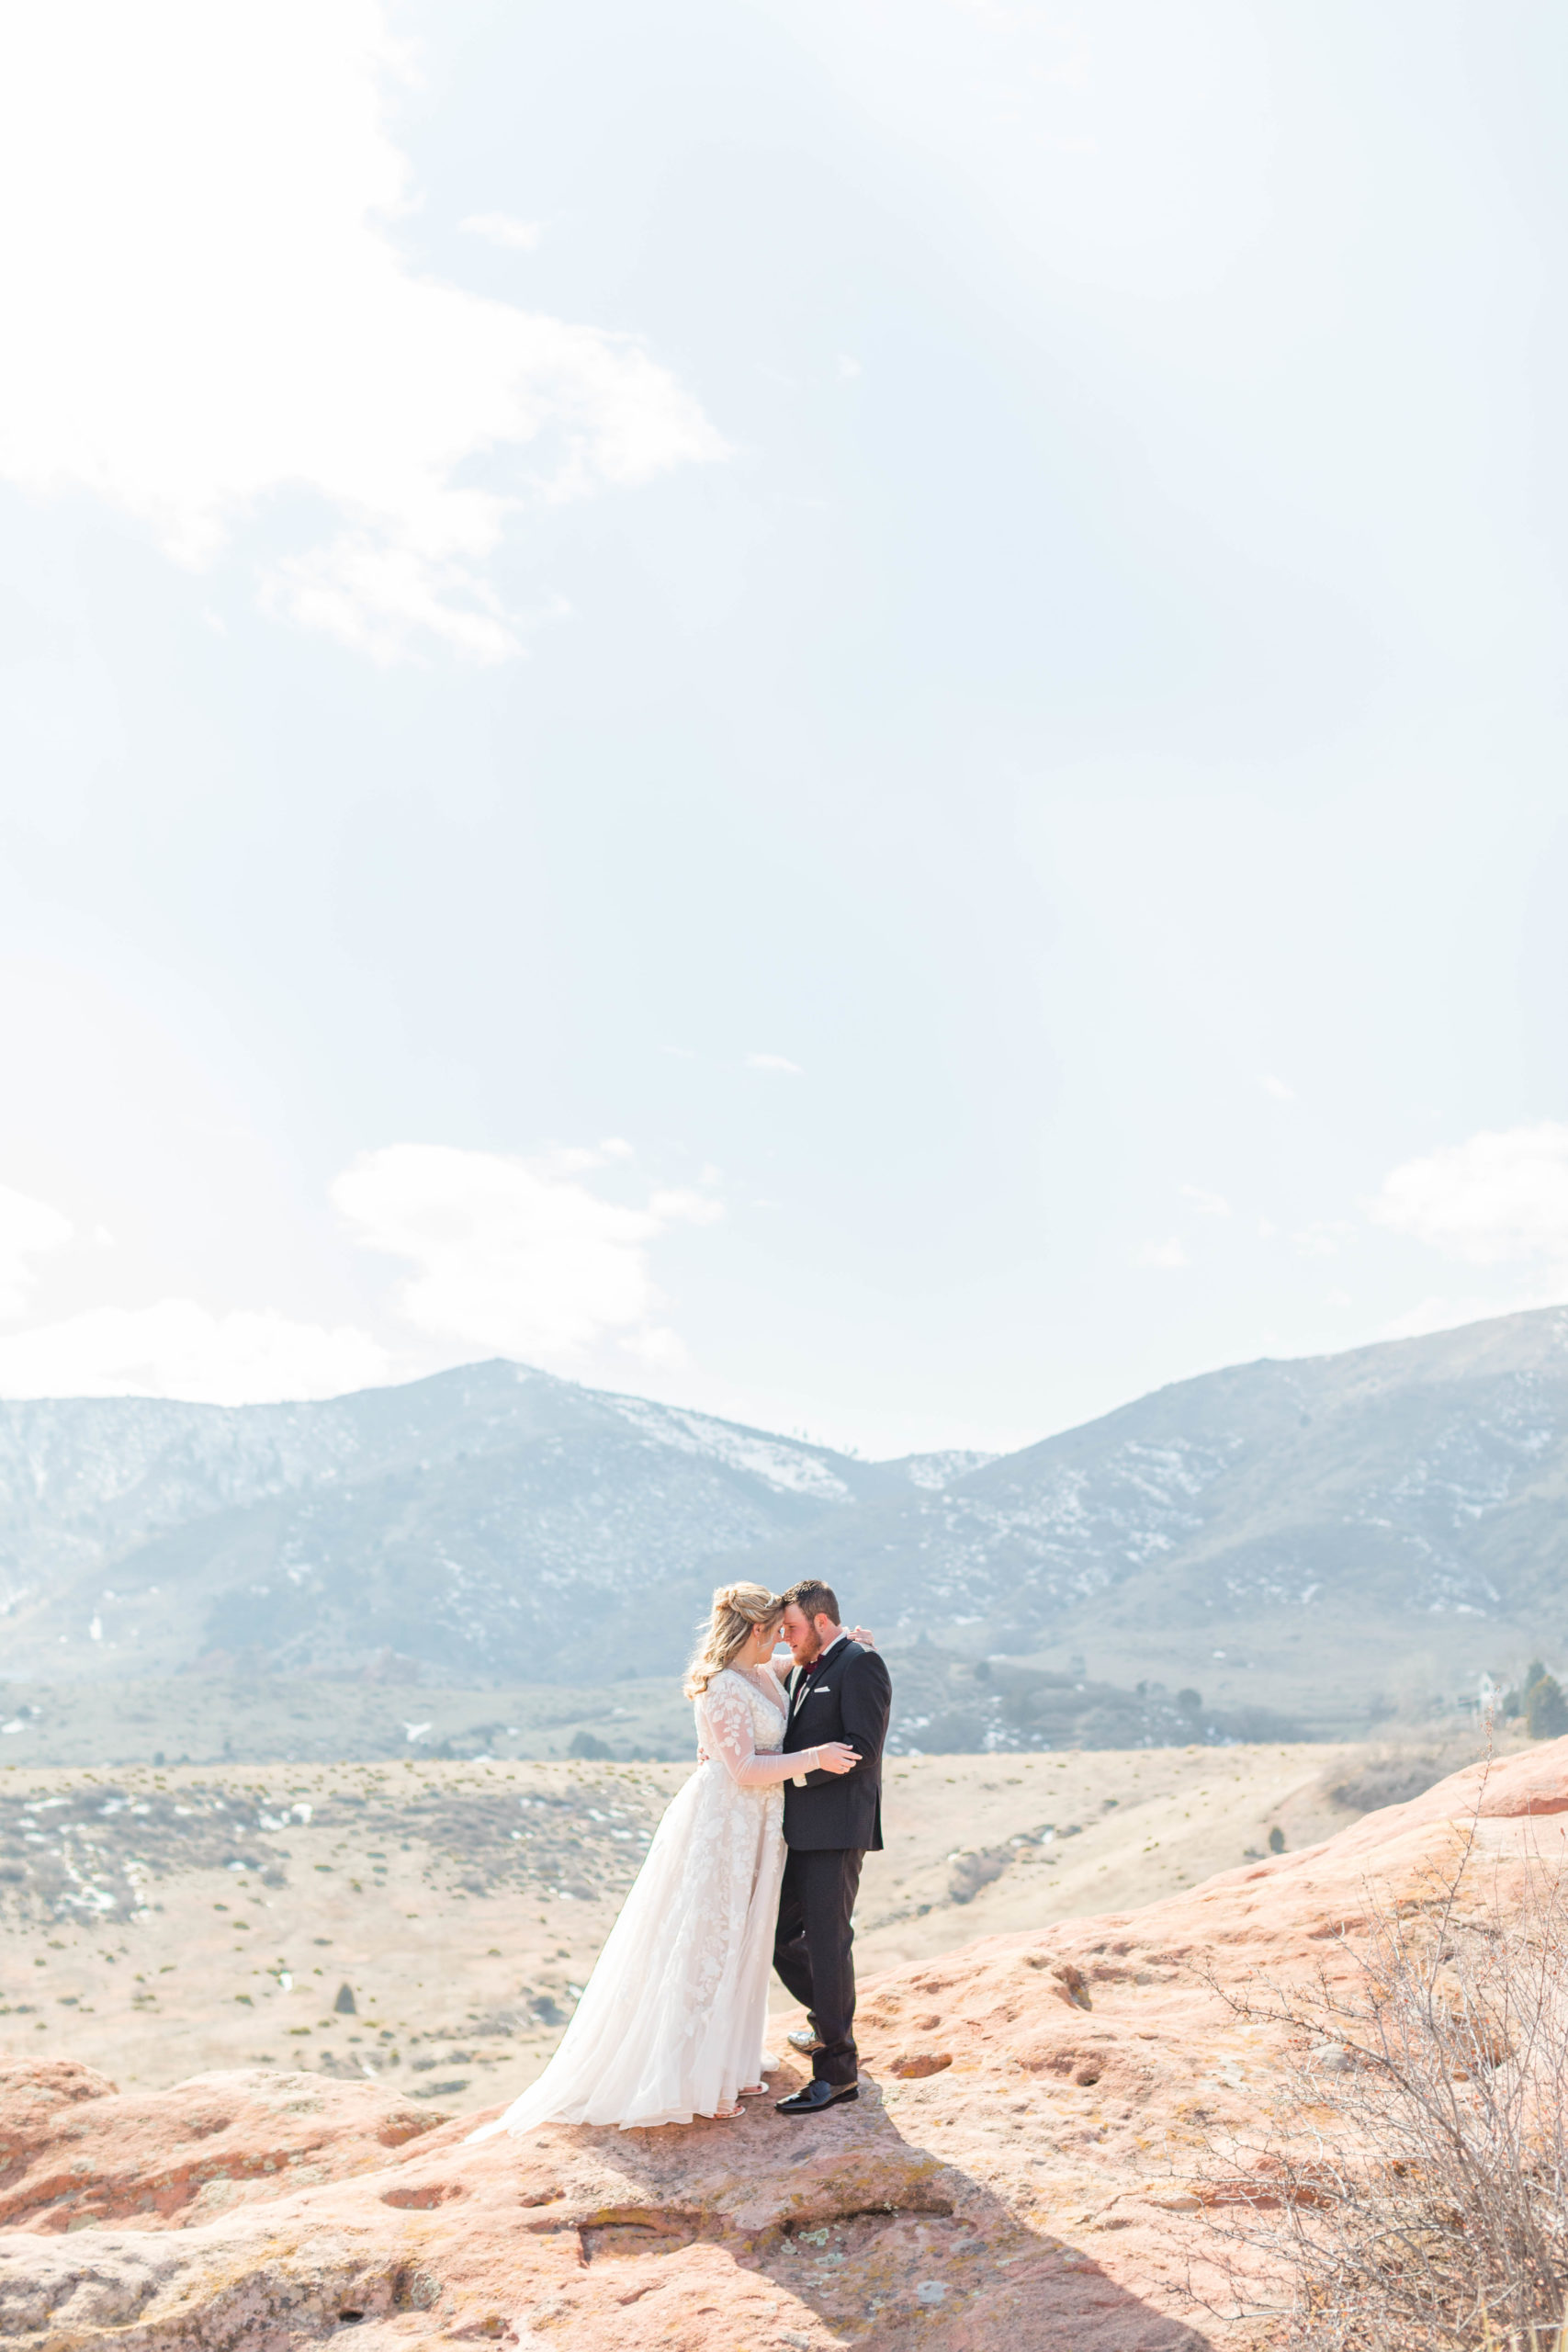 Ken Caryl Vista Wedding shot by Jessica Brees, Littleton Wedding Photographer and Videographer